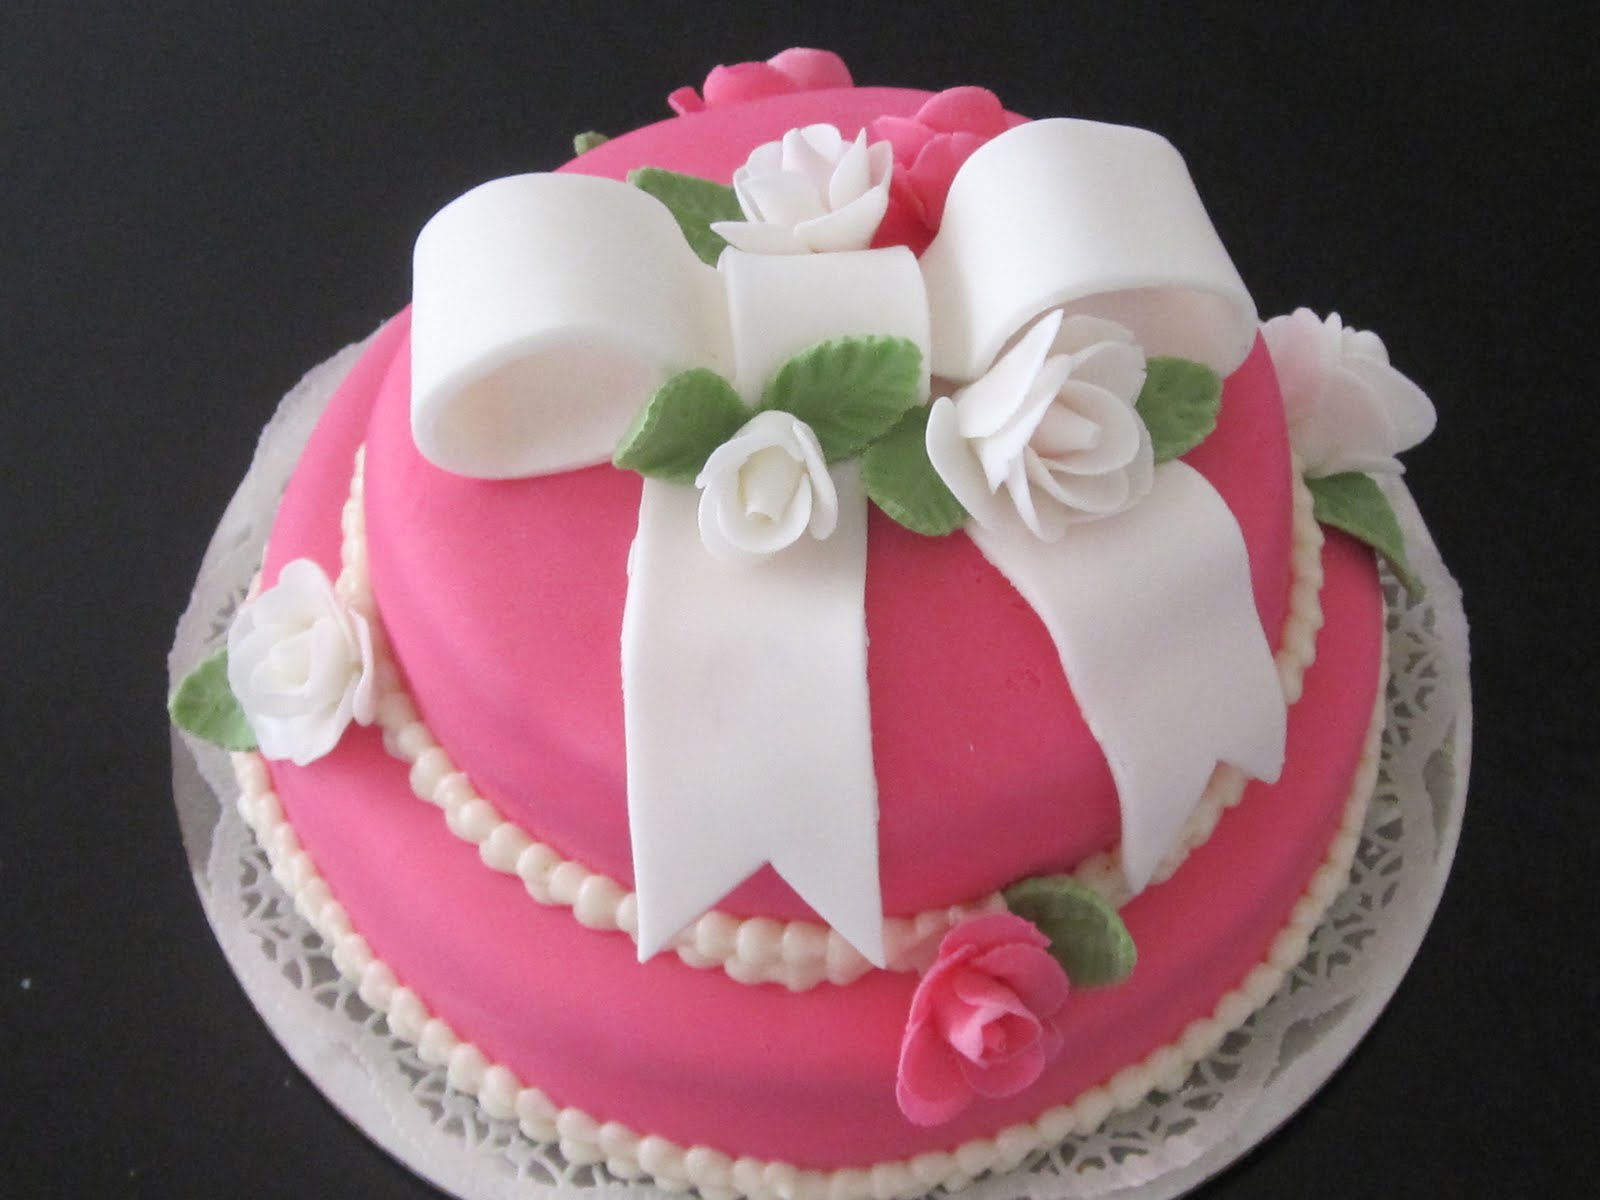 Birthday cake images and Happy Birthday Wishes | Birthday ...